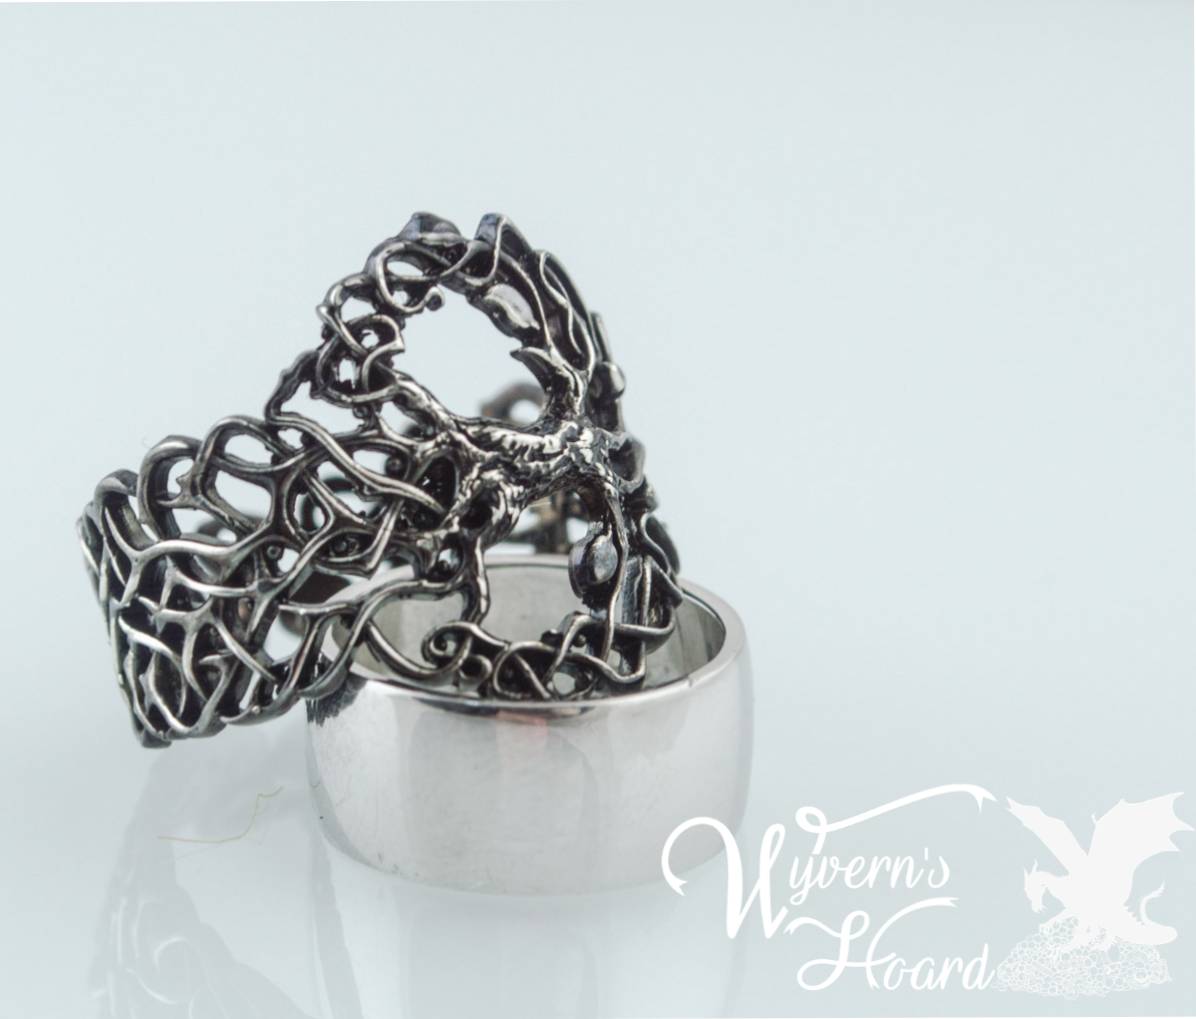 Ornate Yggdrasil Sterling Silver Ring